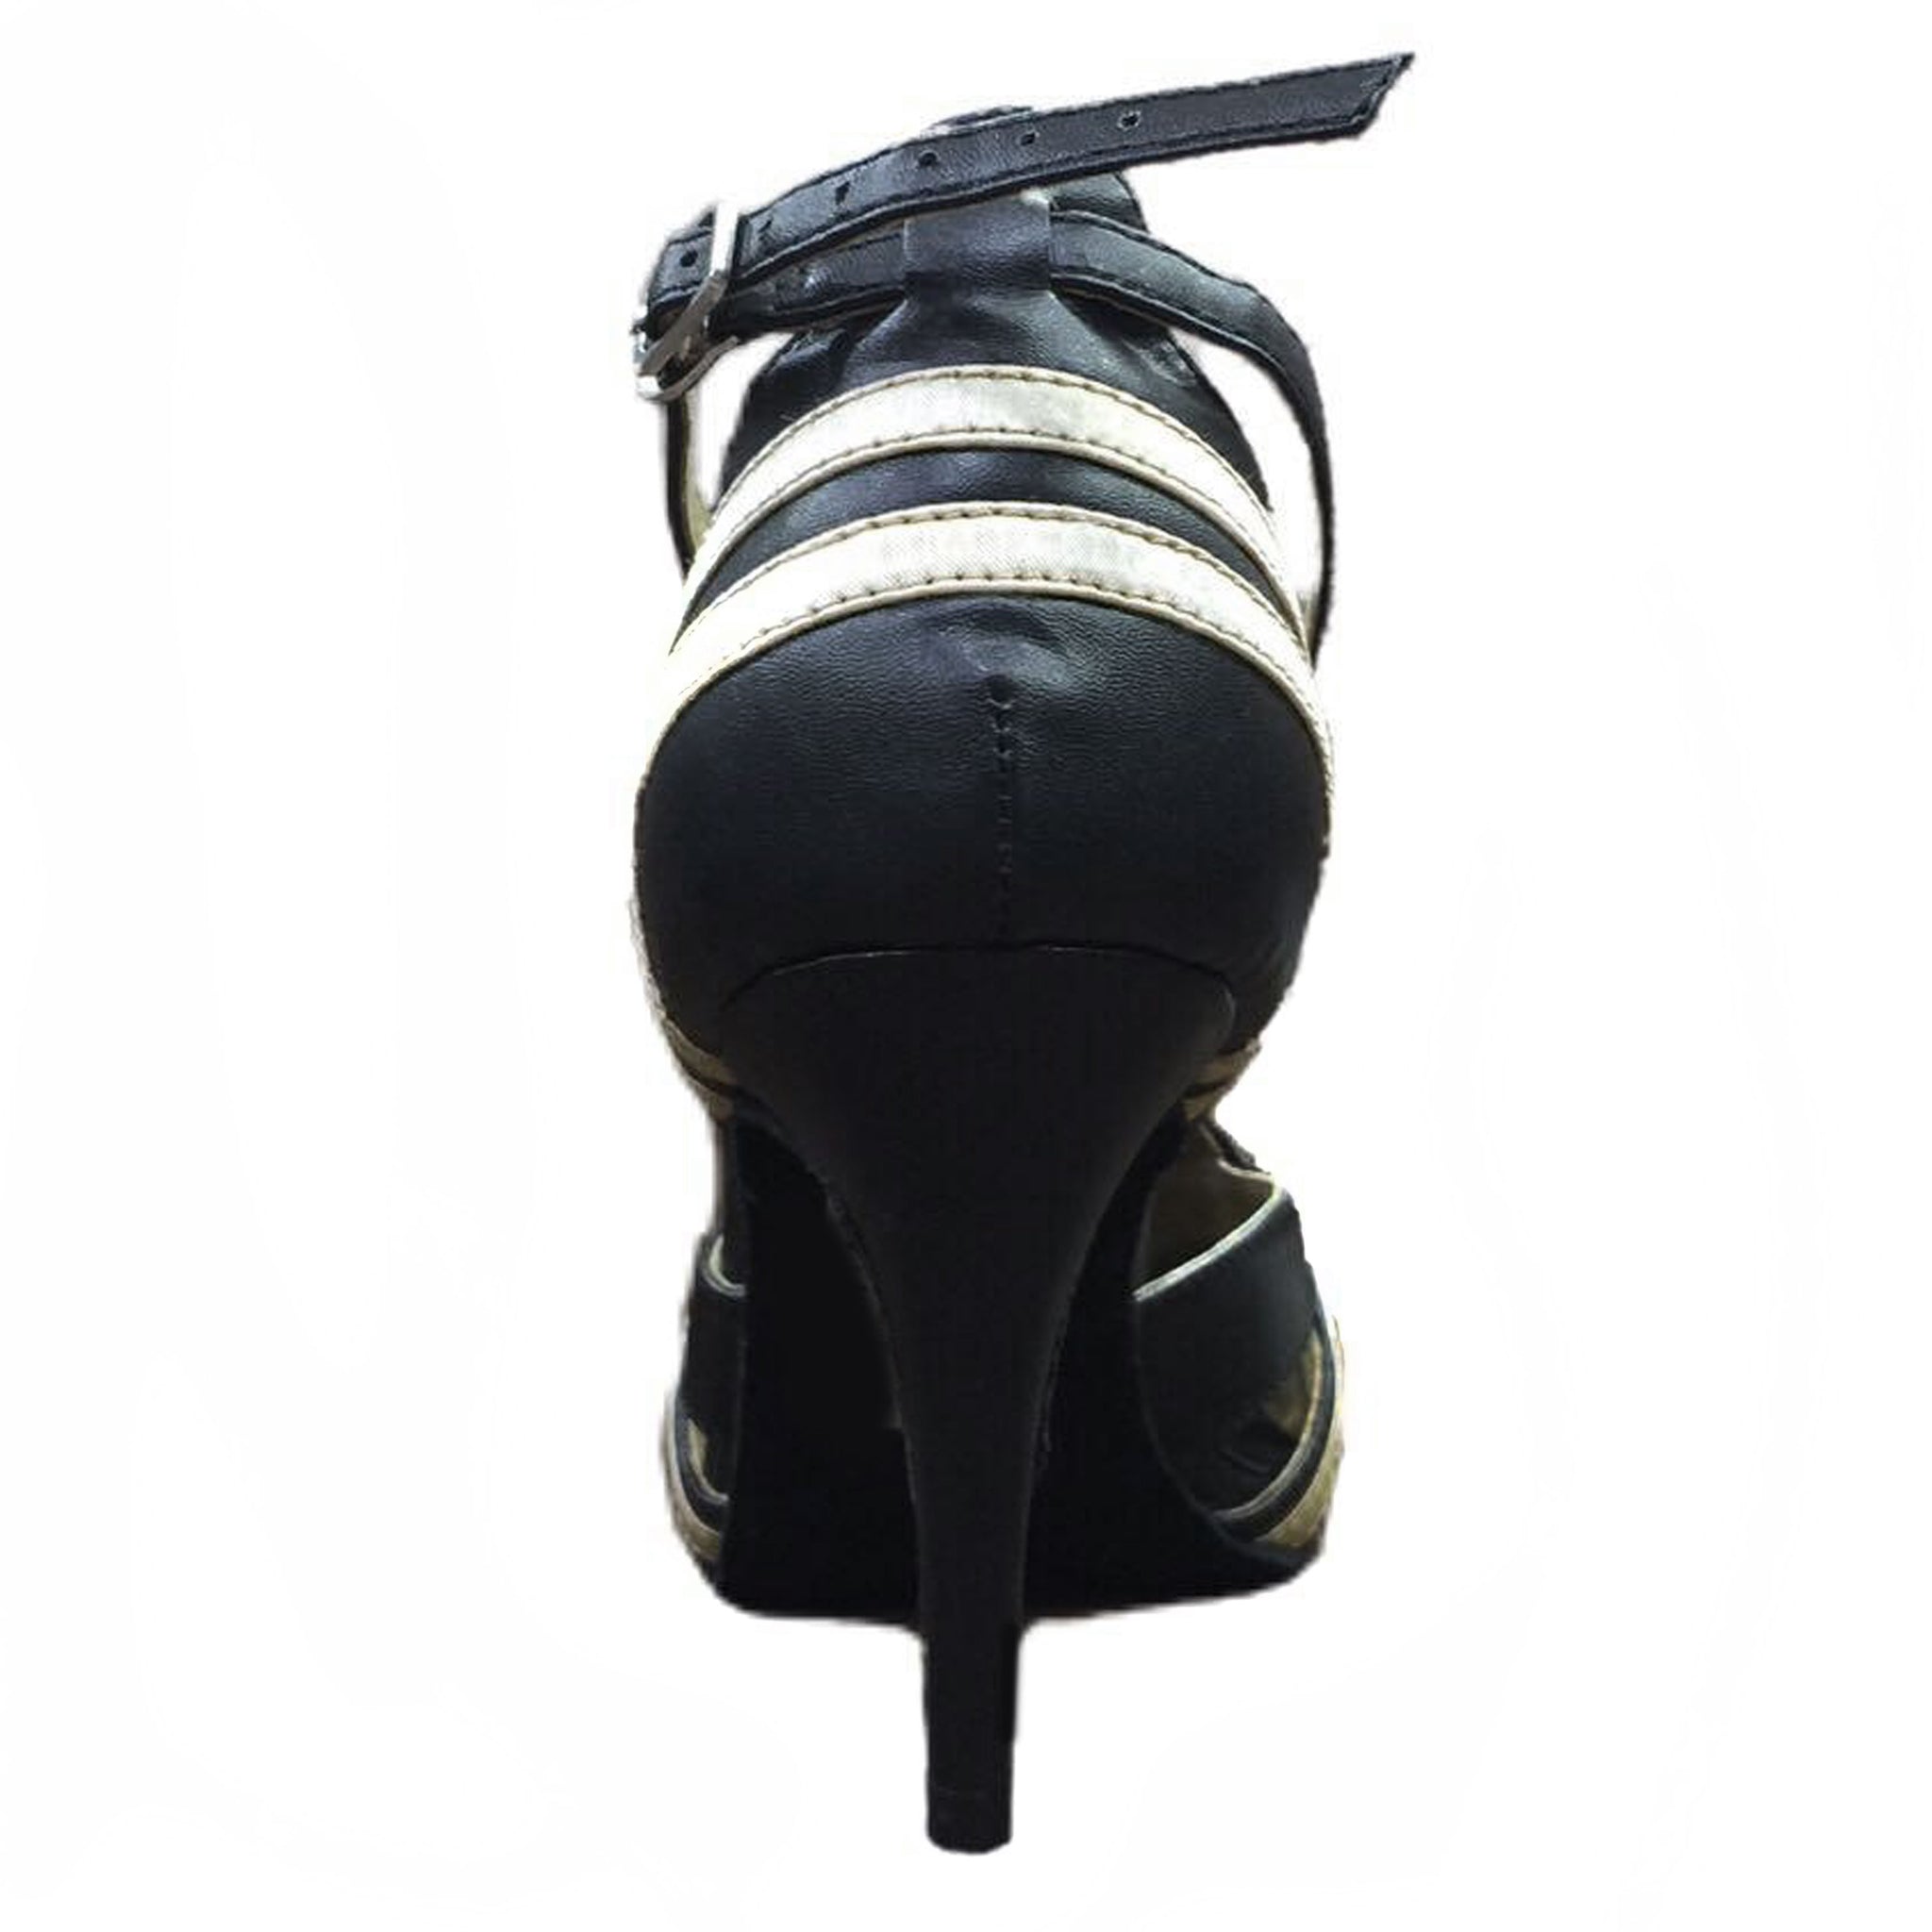 Help Me Dance Dancing Shoe Latin/Salsa Dace Shoes for Ladies Leather Female - KVE-30061N - Simpal Boutique